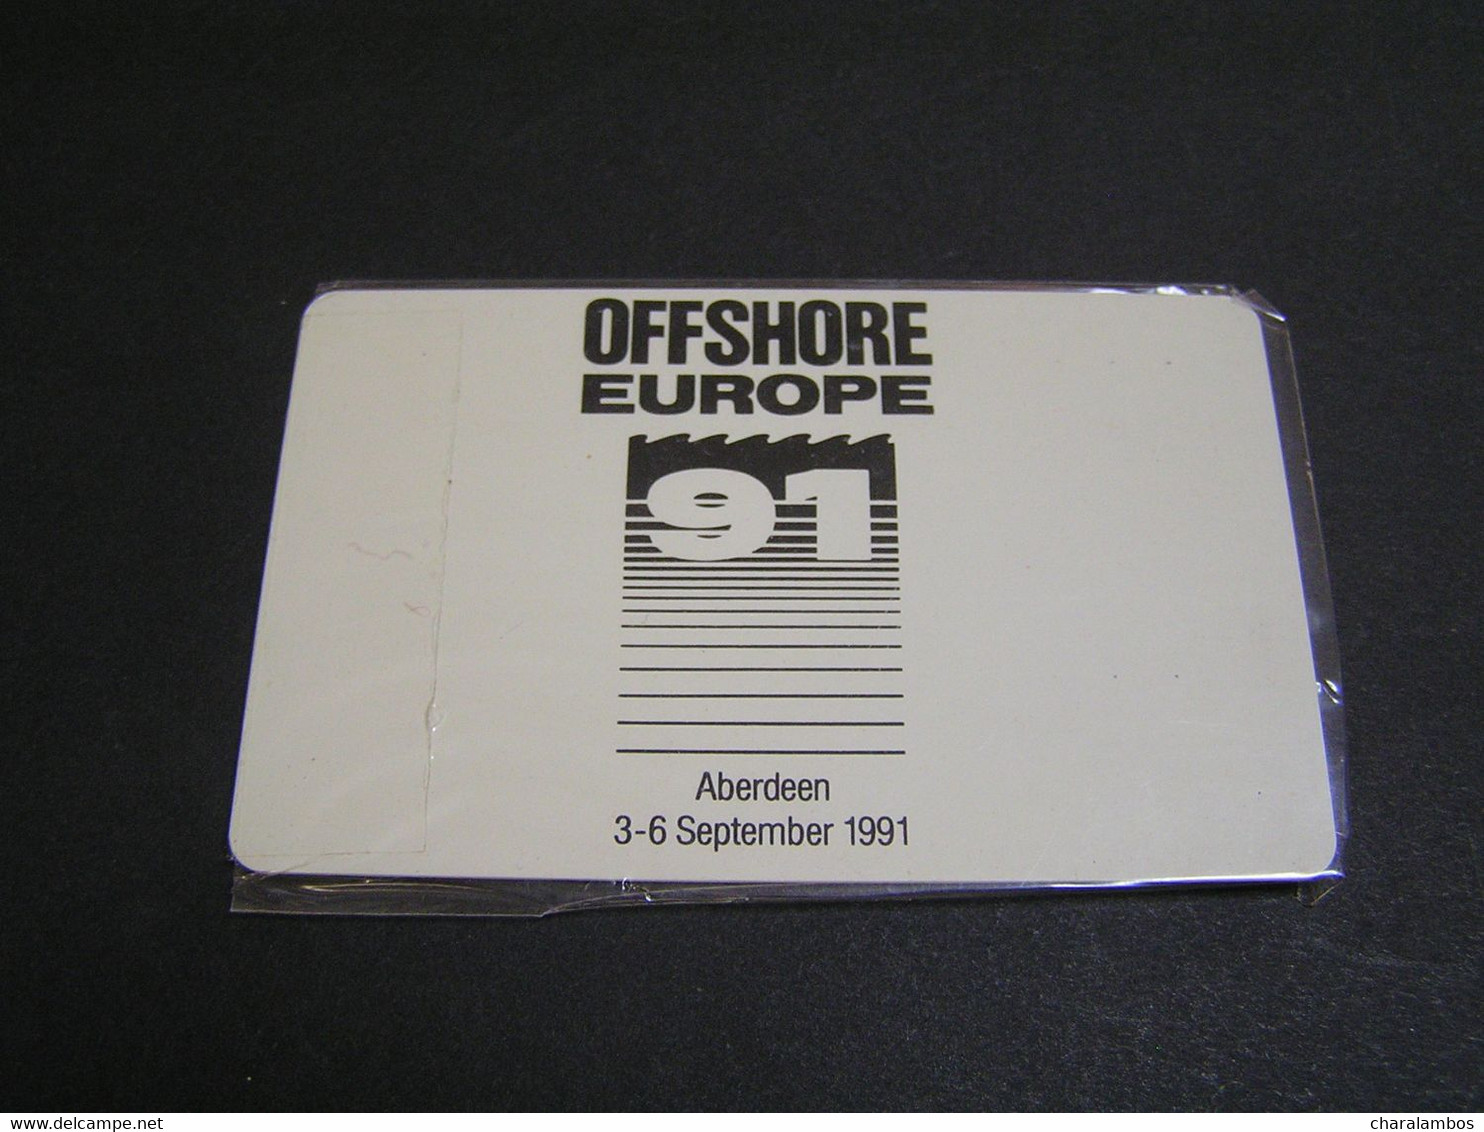 SCOTLAND OFFSHORE EUROPE 91 . - Oil